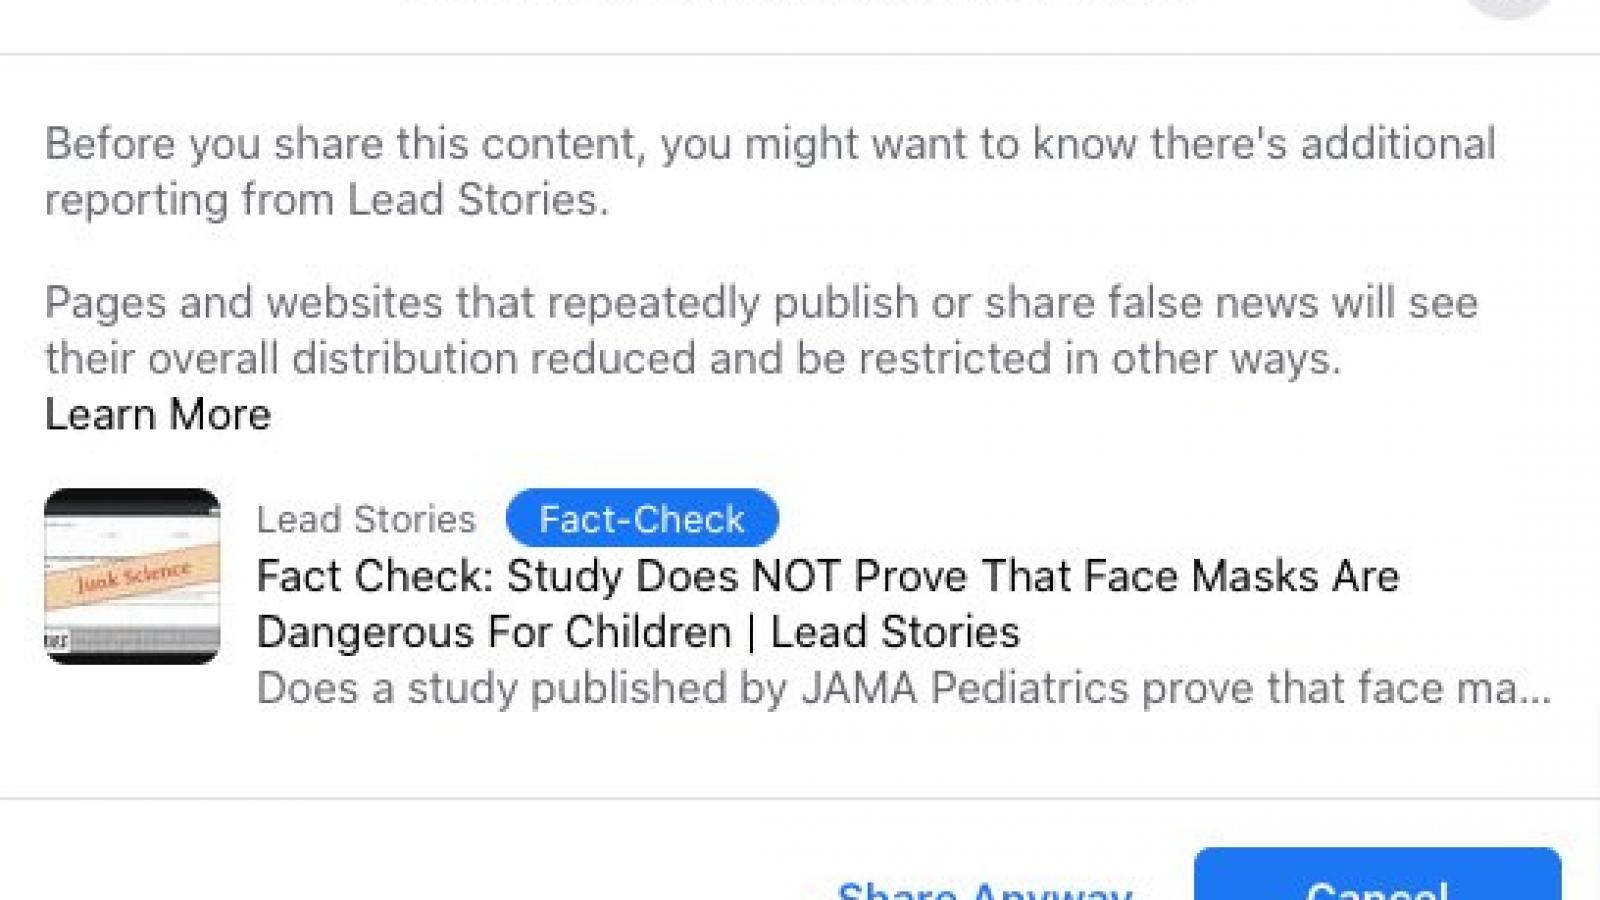 Facebook warning about JAMA Pediatrics study